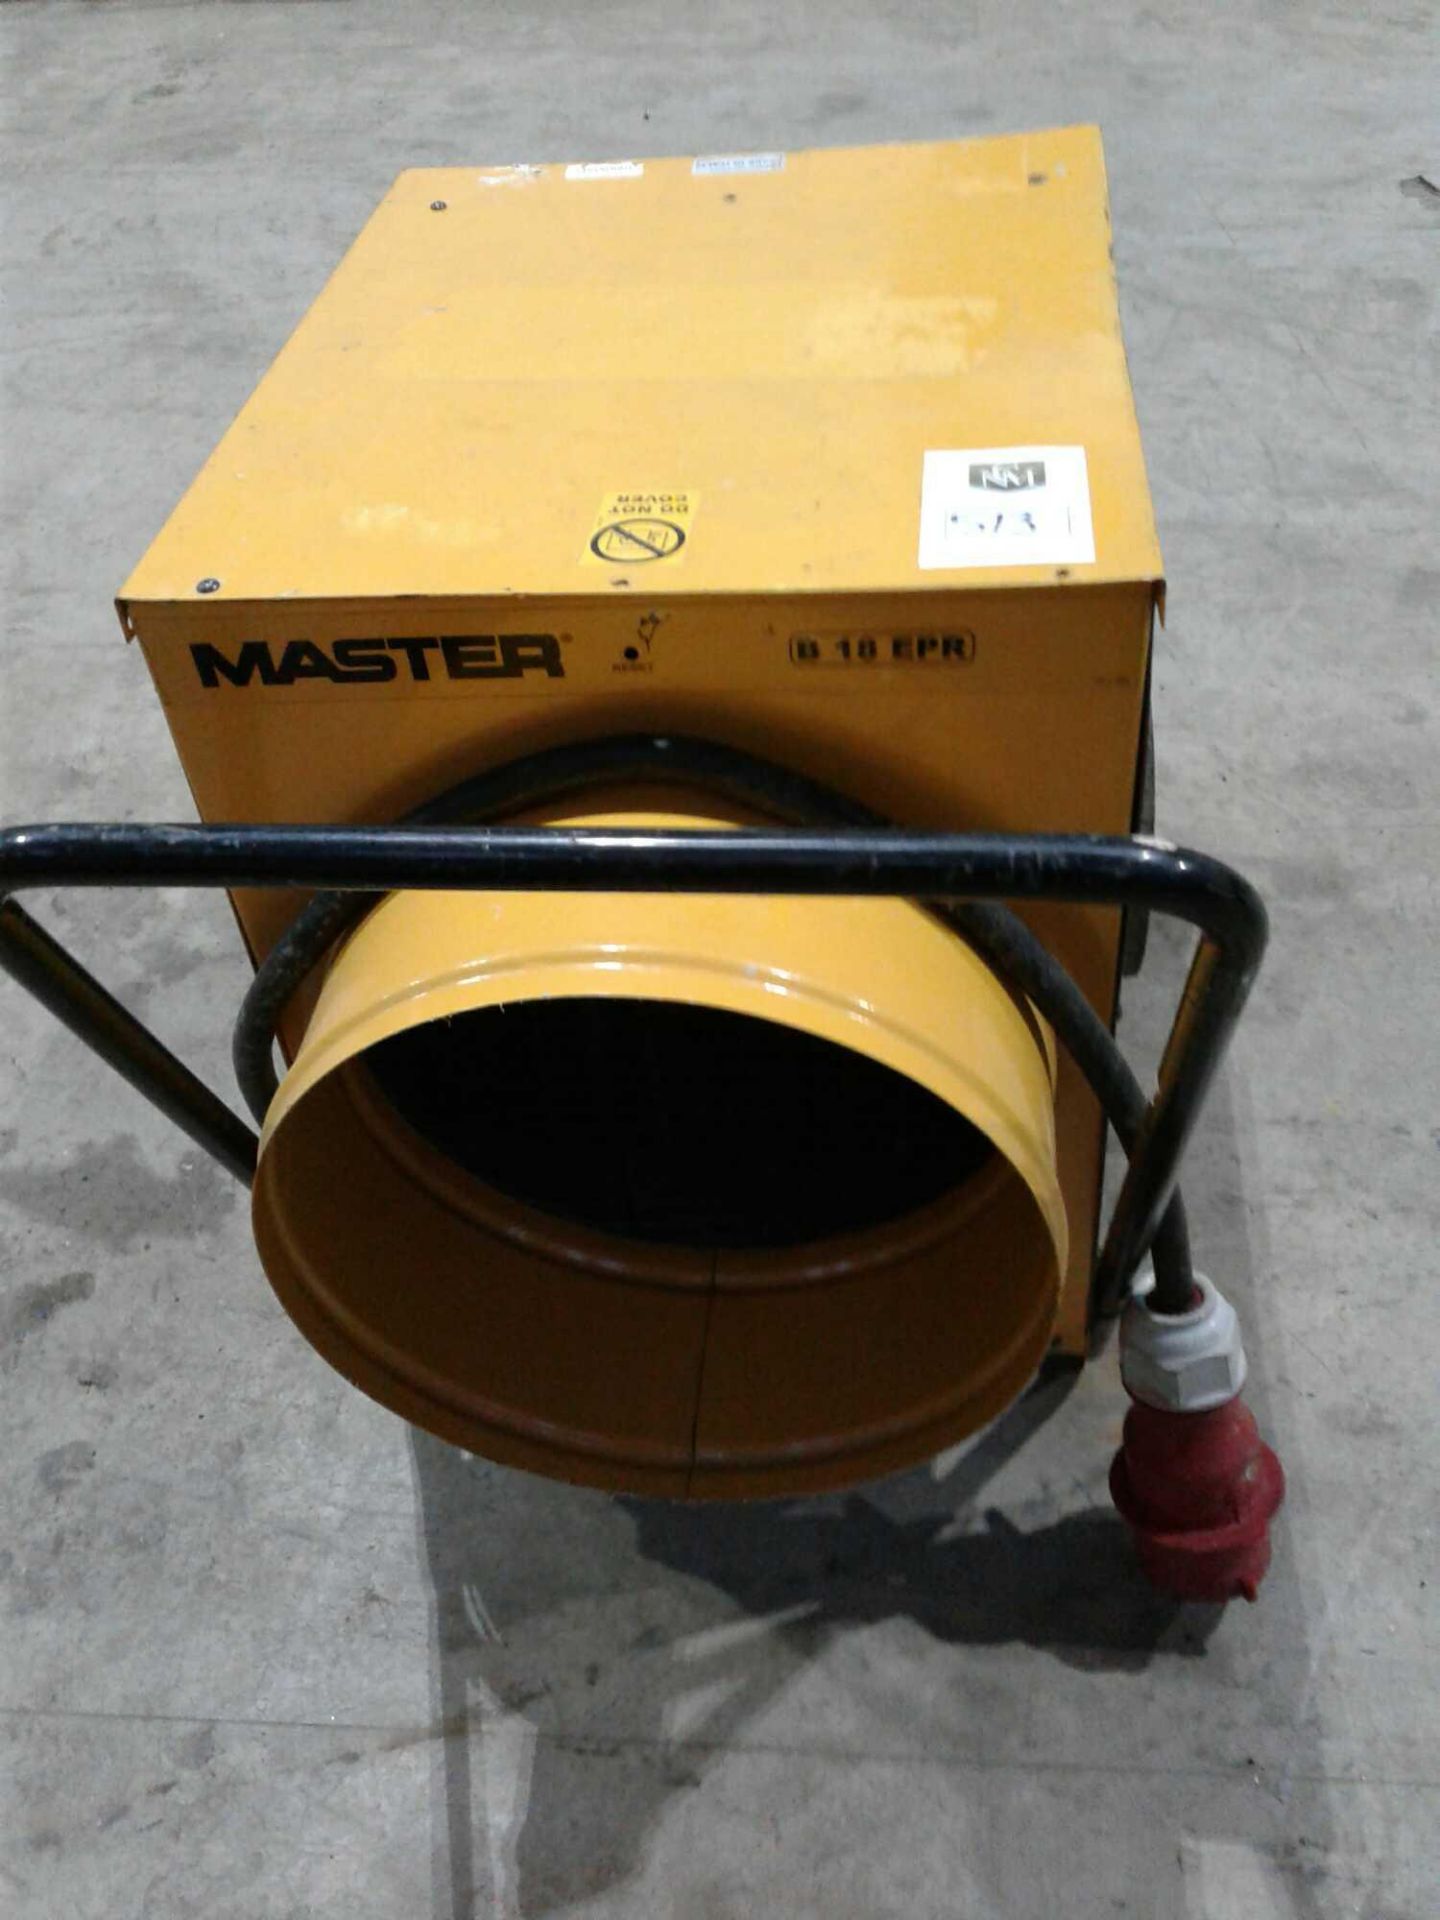 Master 18kw 415v portable heater